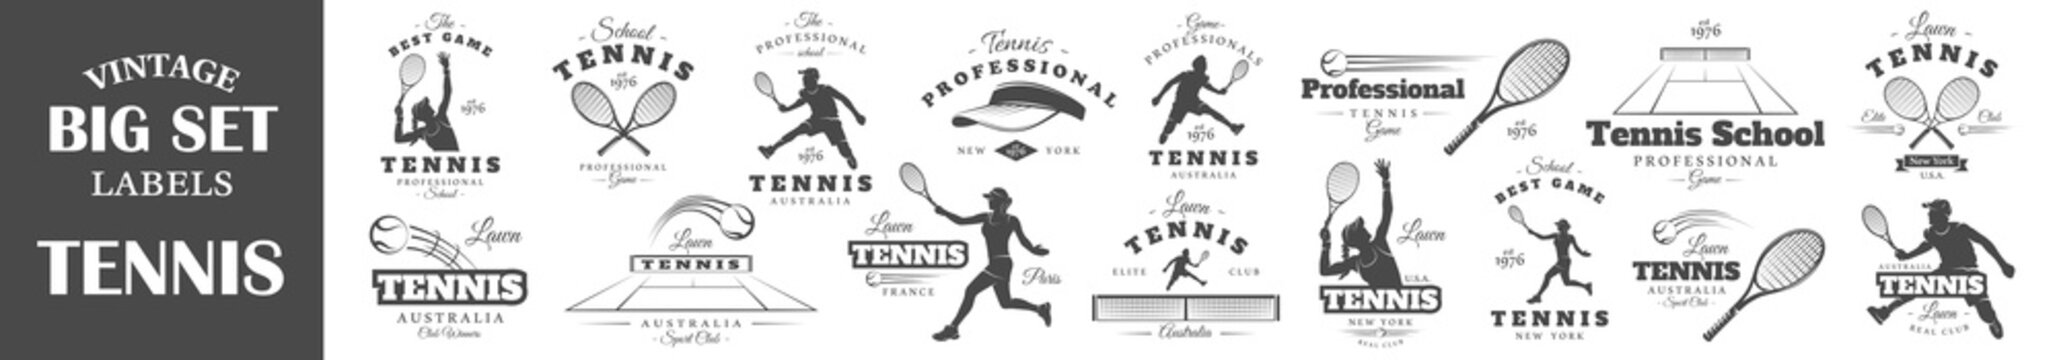 Set of vintage tennis labels. Posters, stamps, banners and design elements. Vector illustration